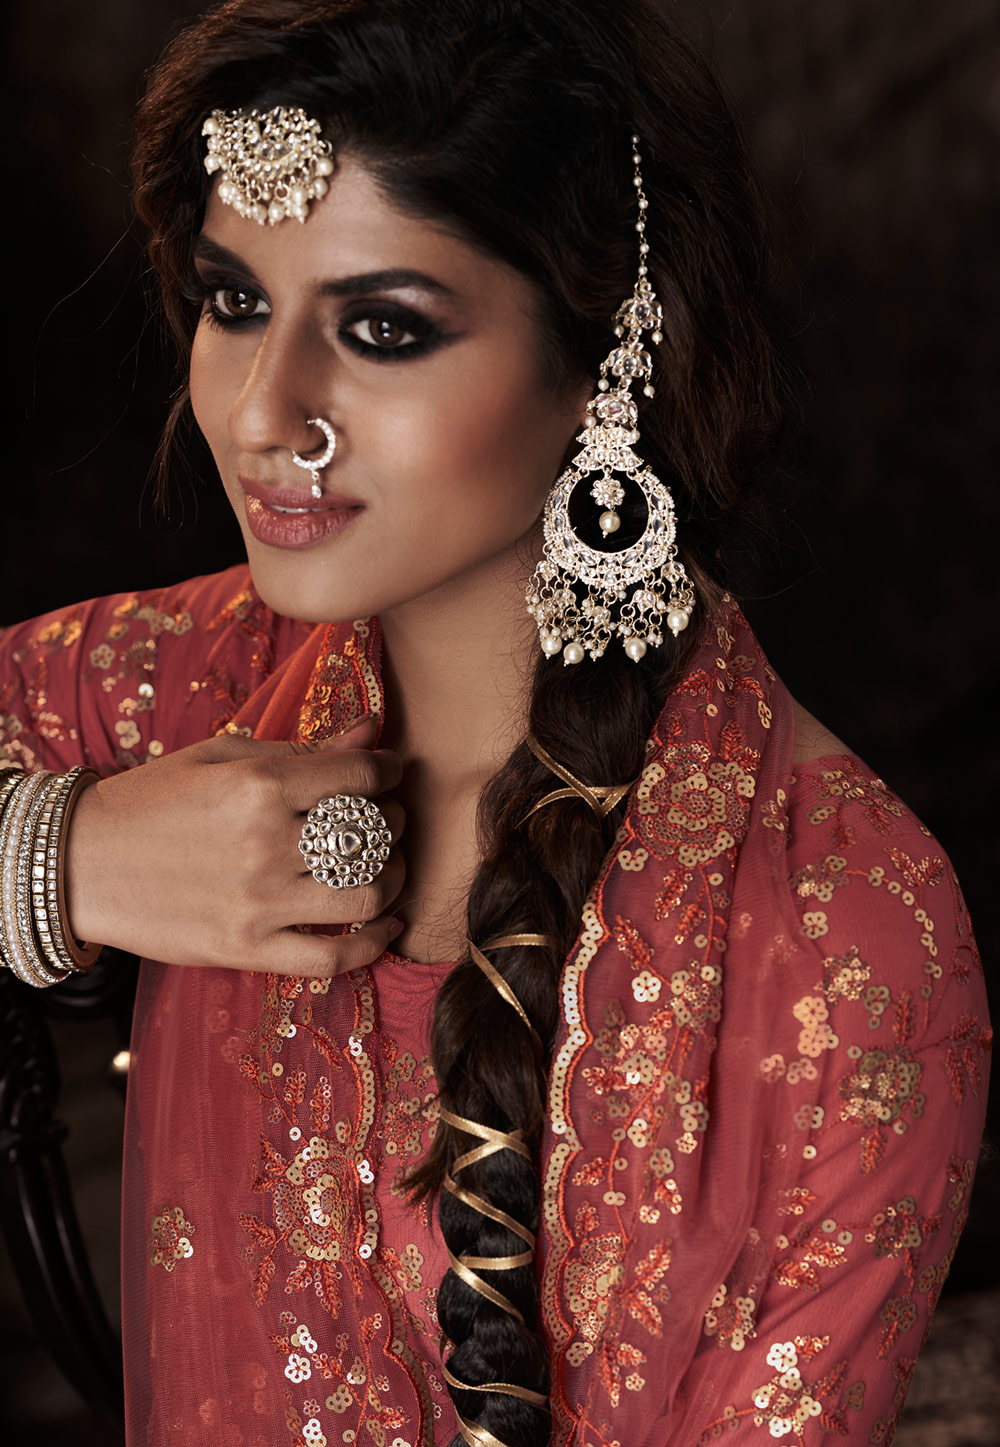 Deepika Padukone defines royalty in a heavily embellished ivory sharara